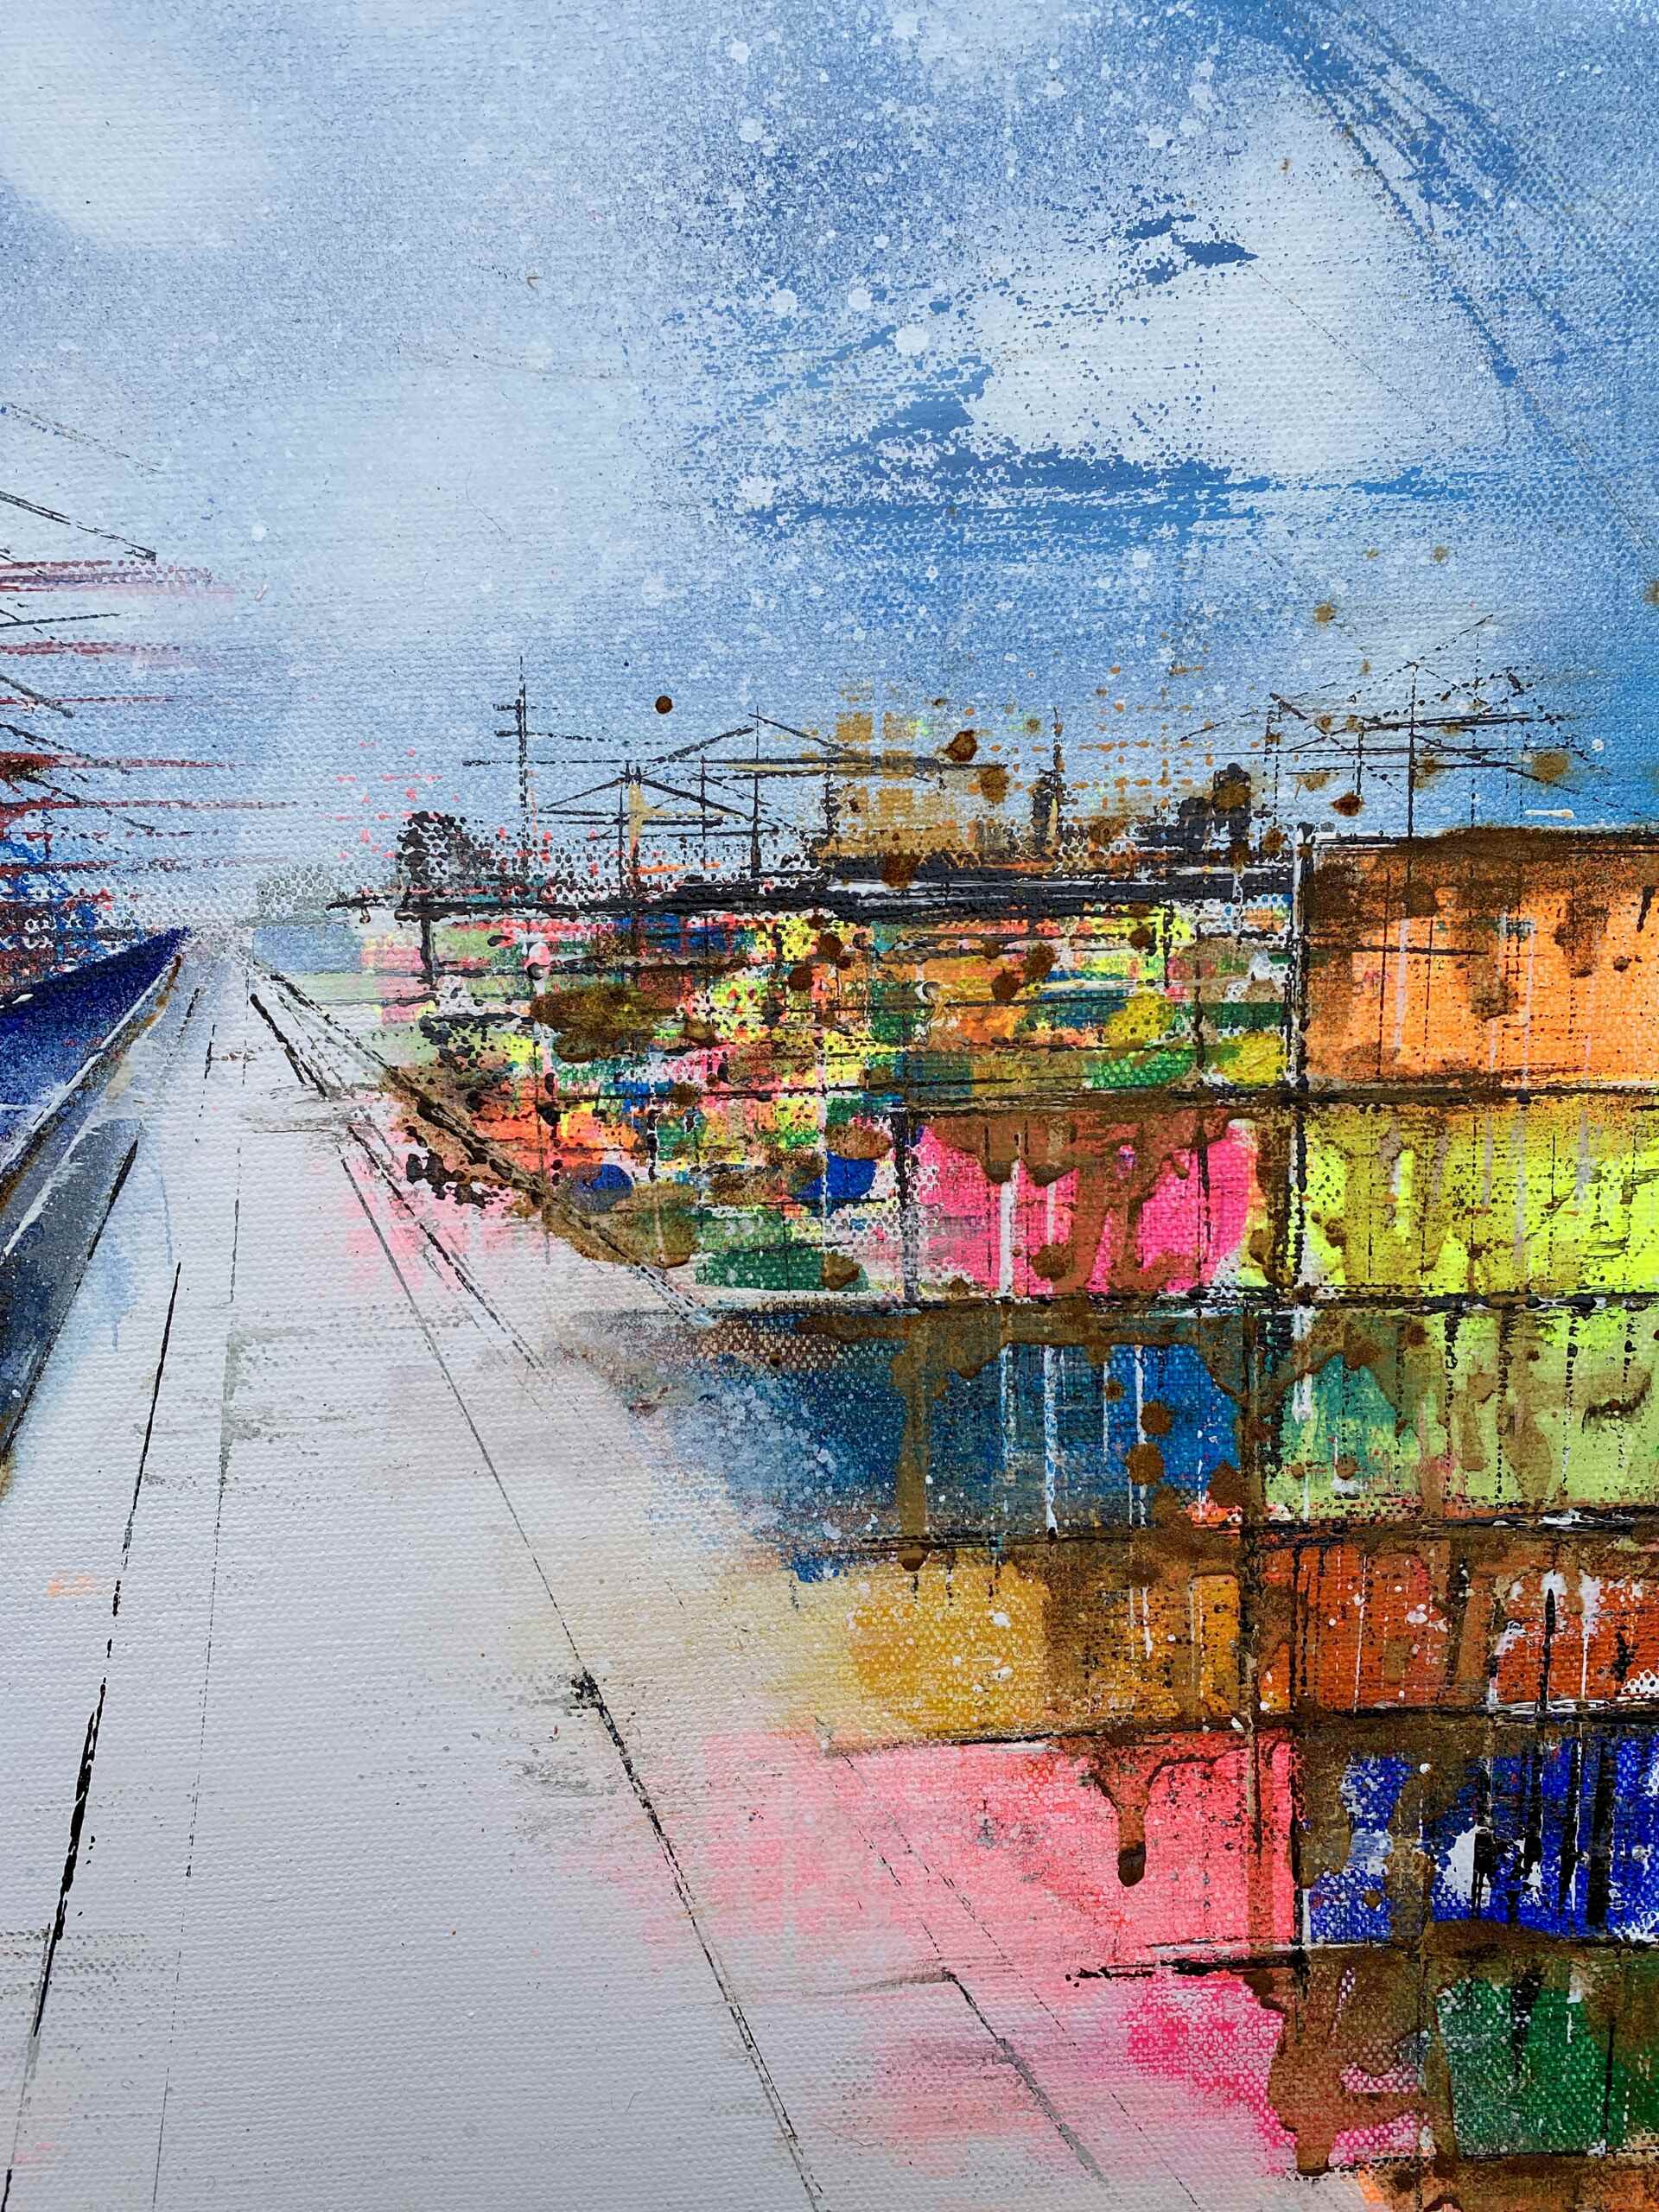 Details of artwork "Dock No 9“ by Nina Groth